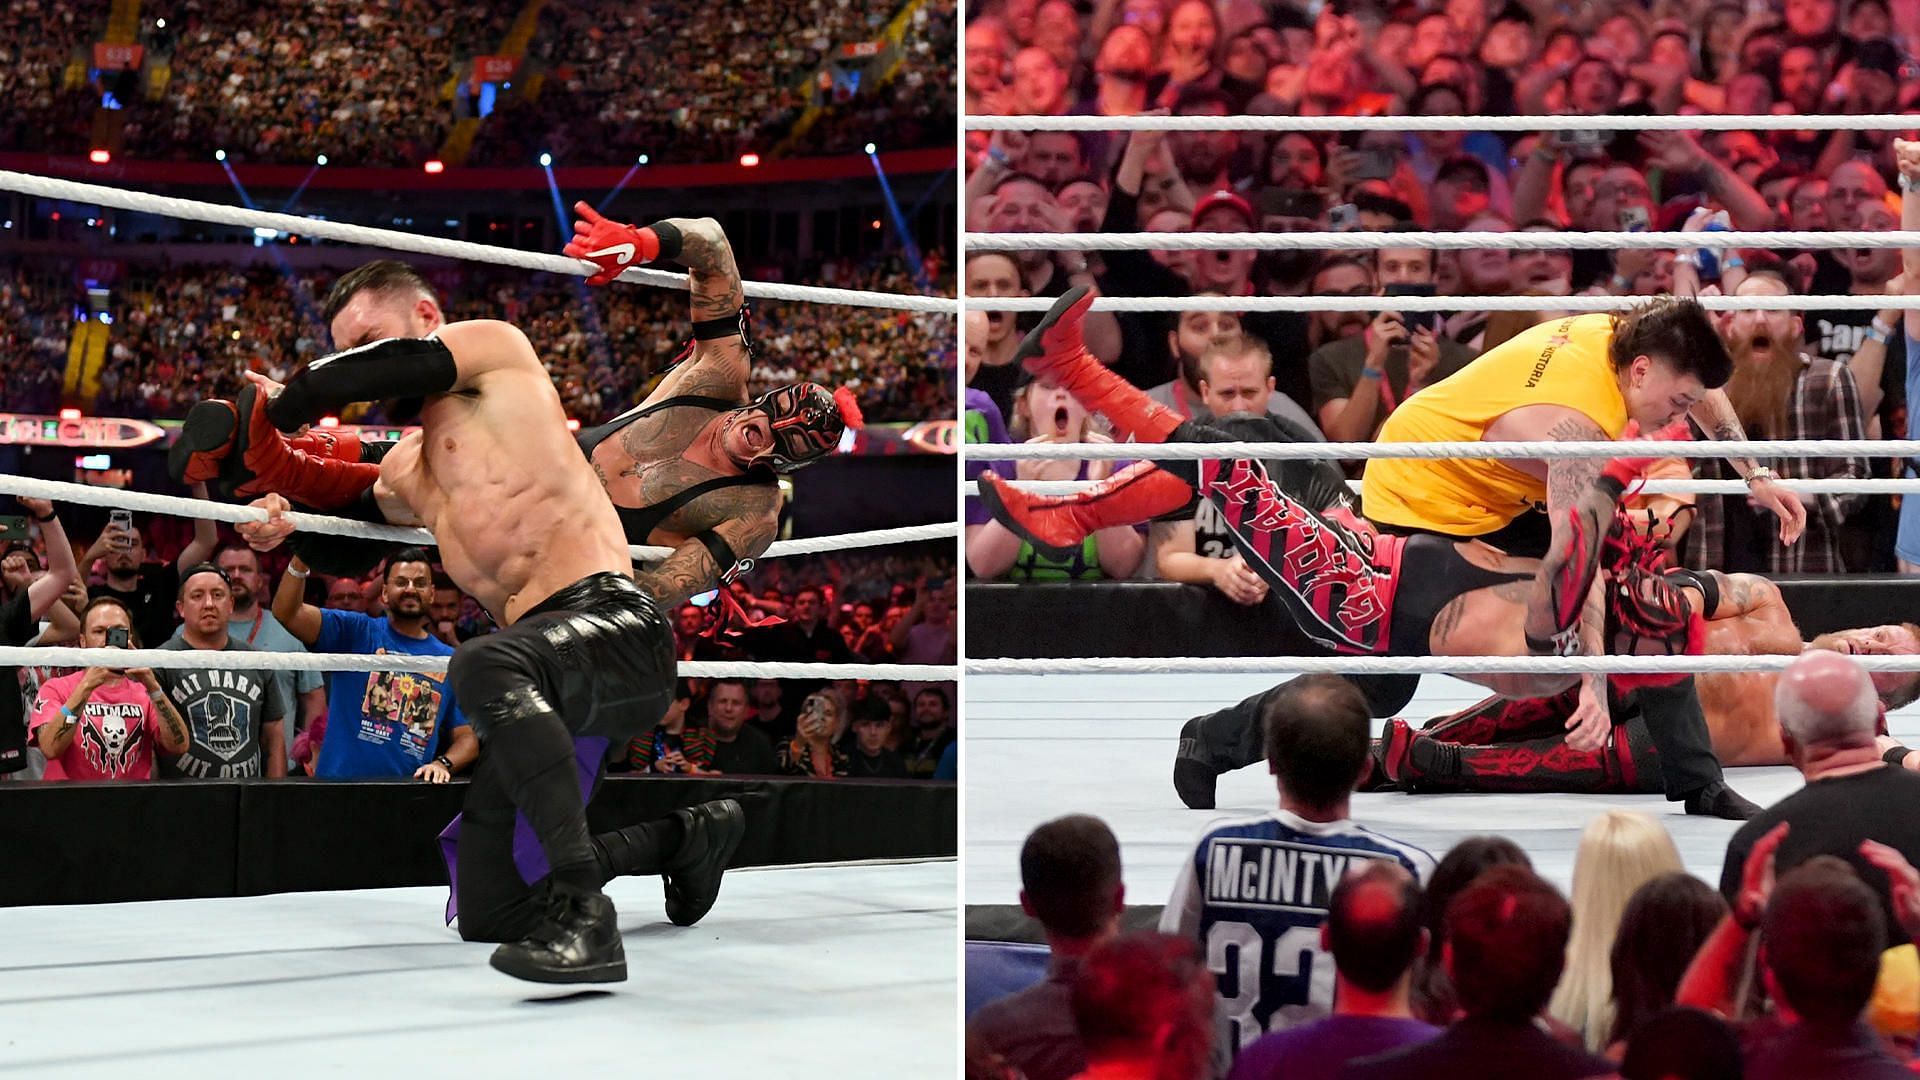 Dominik Mysterio sent shockwaves through the WWE Universe